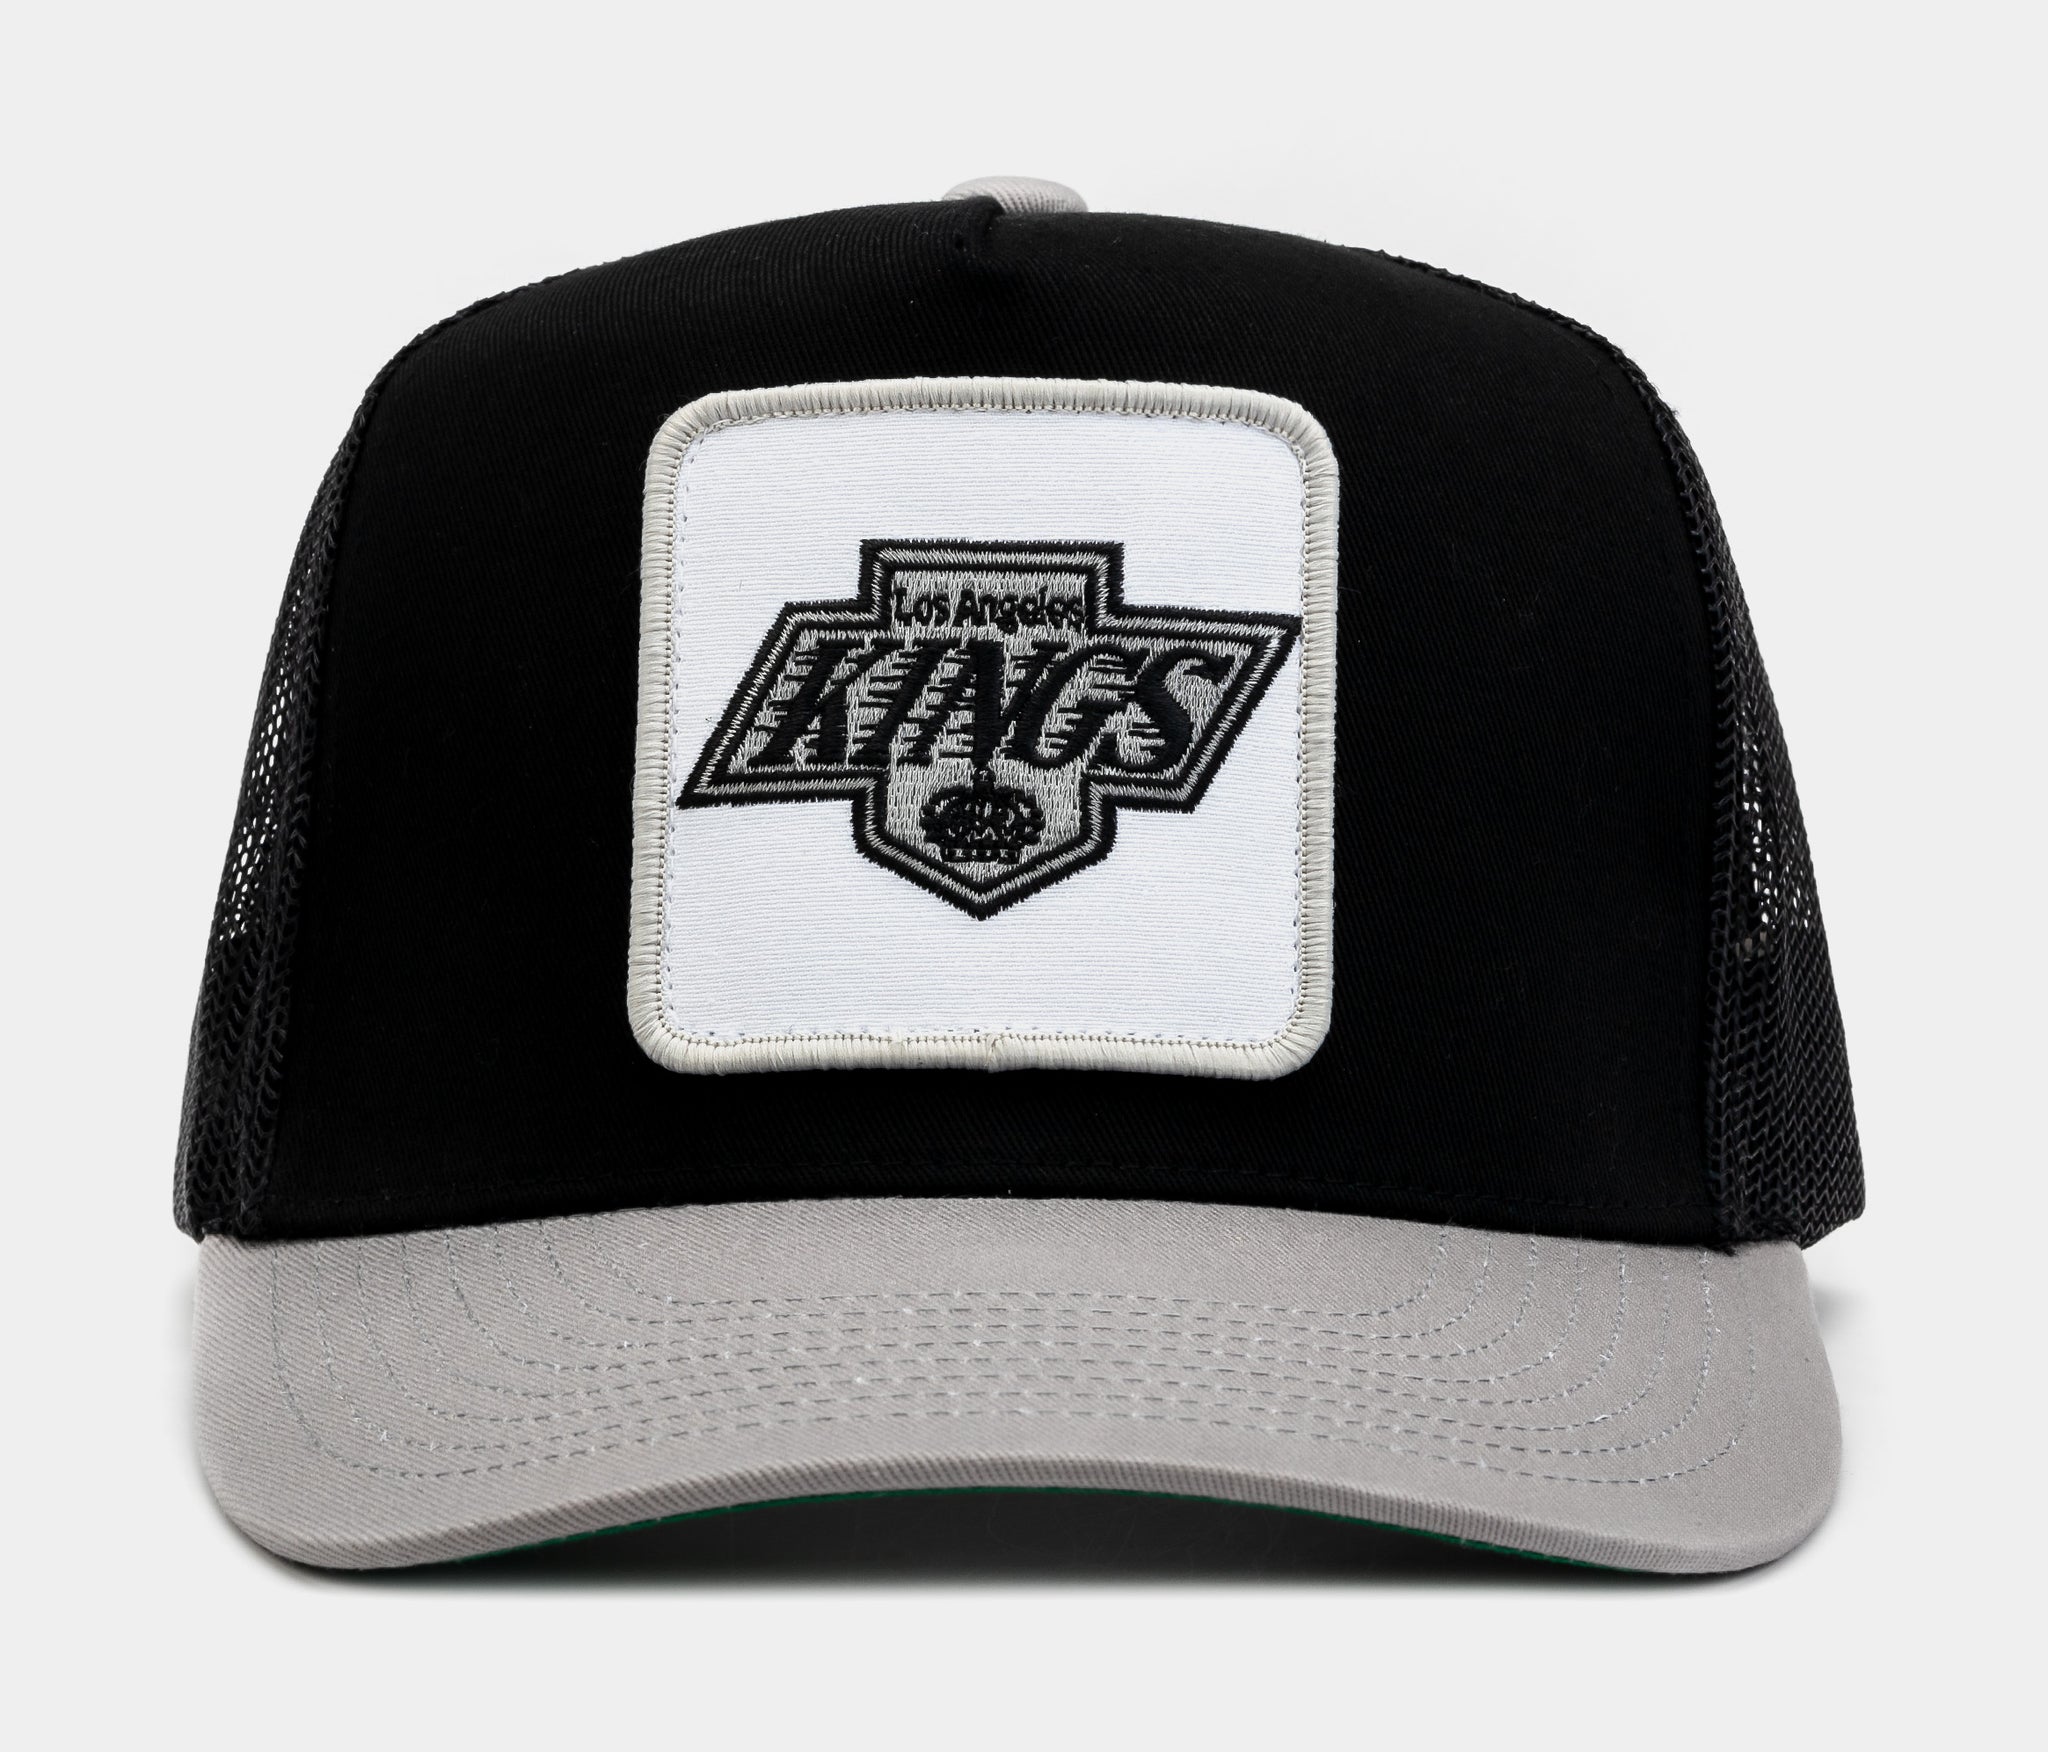 Men's T-Shirt Mitchell & Ness NHL Team Logo Tee Los Angeles Kings Black